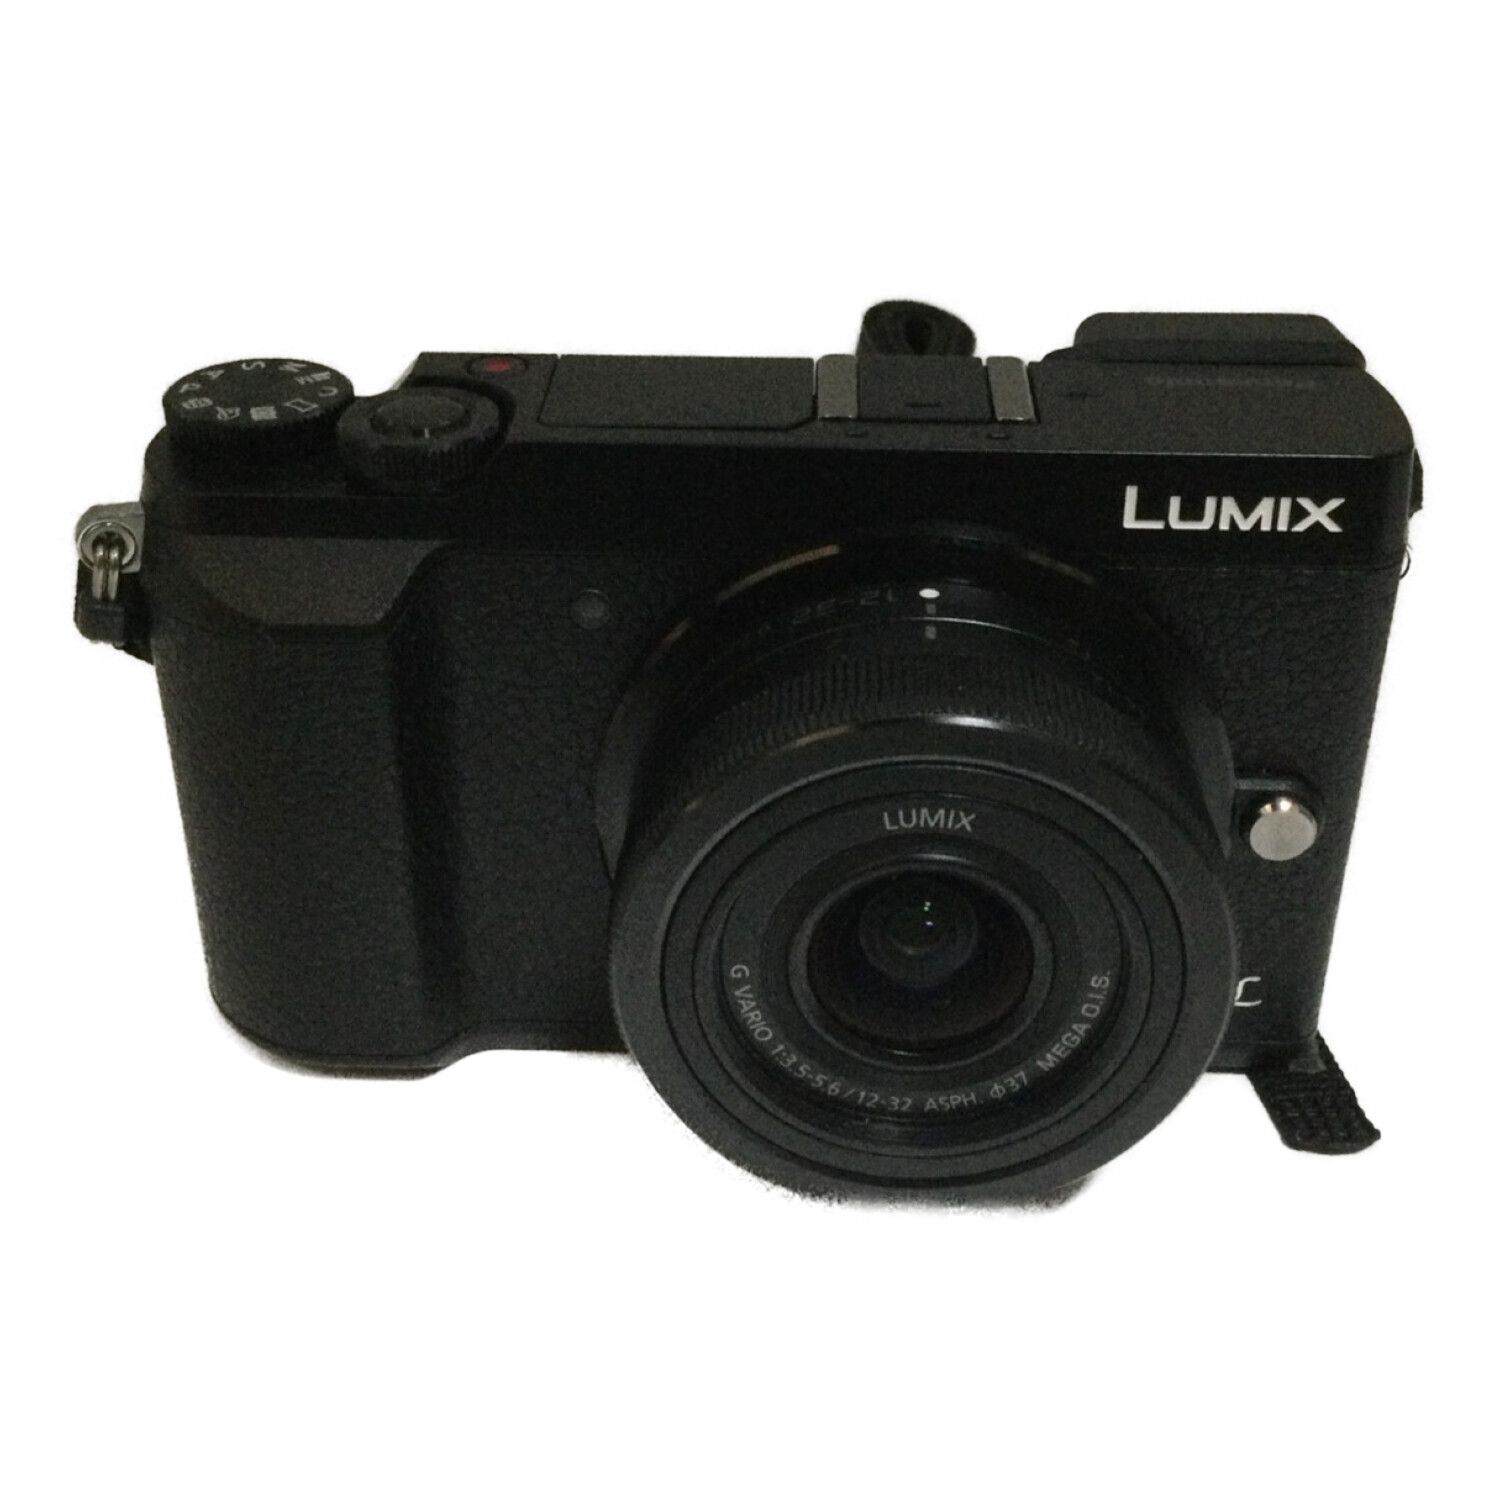 Panasonic (パナソニック) ミラーレス一眼カメラ DMC-GX7MK2K 1600万